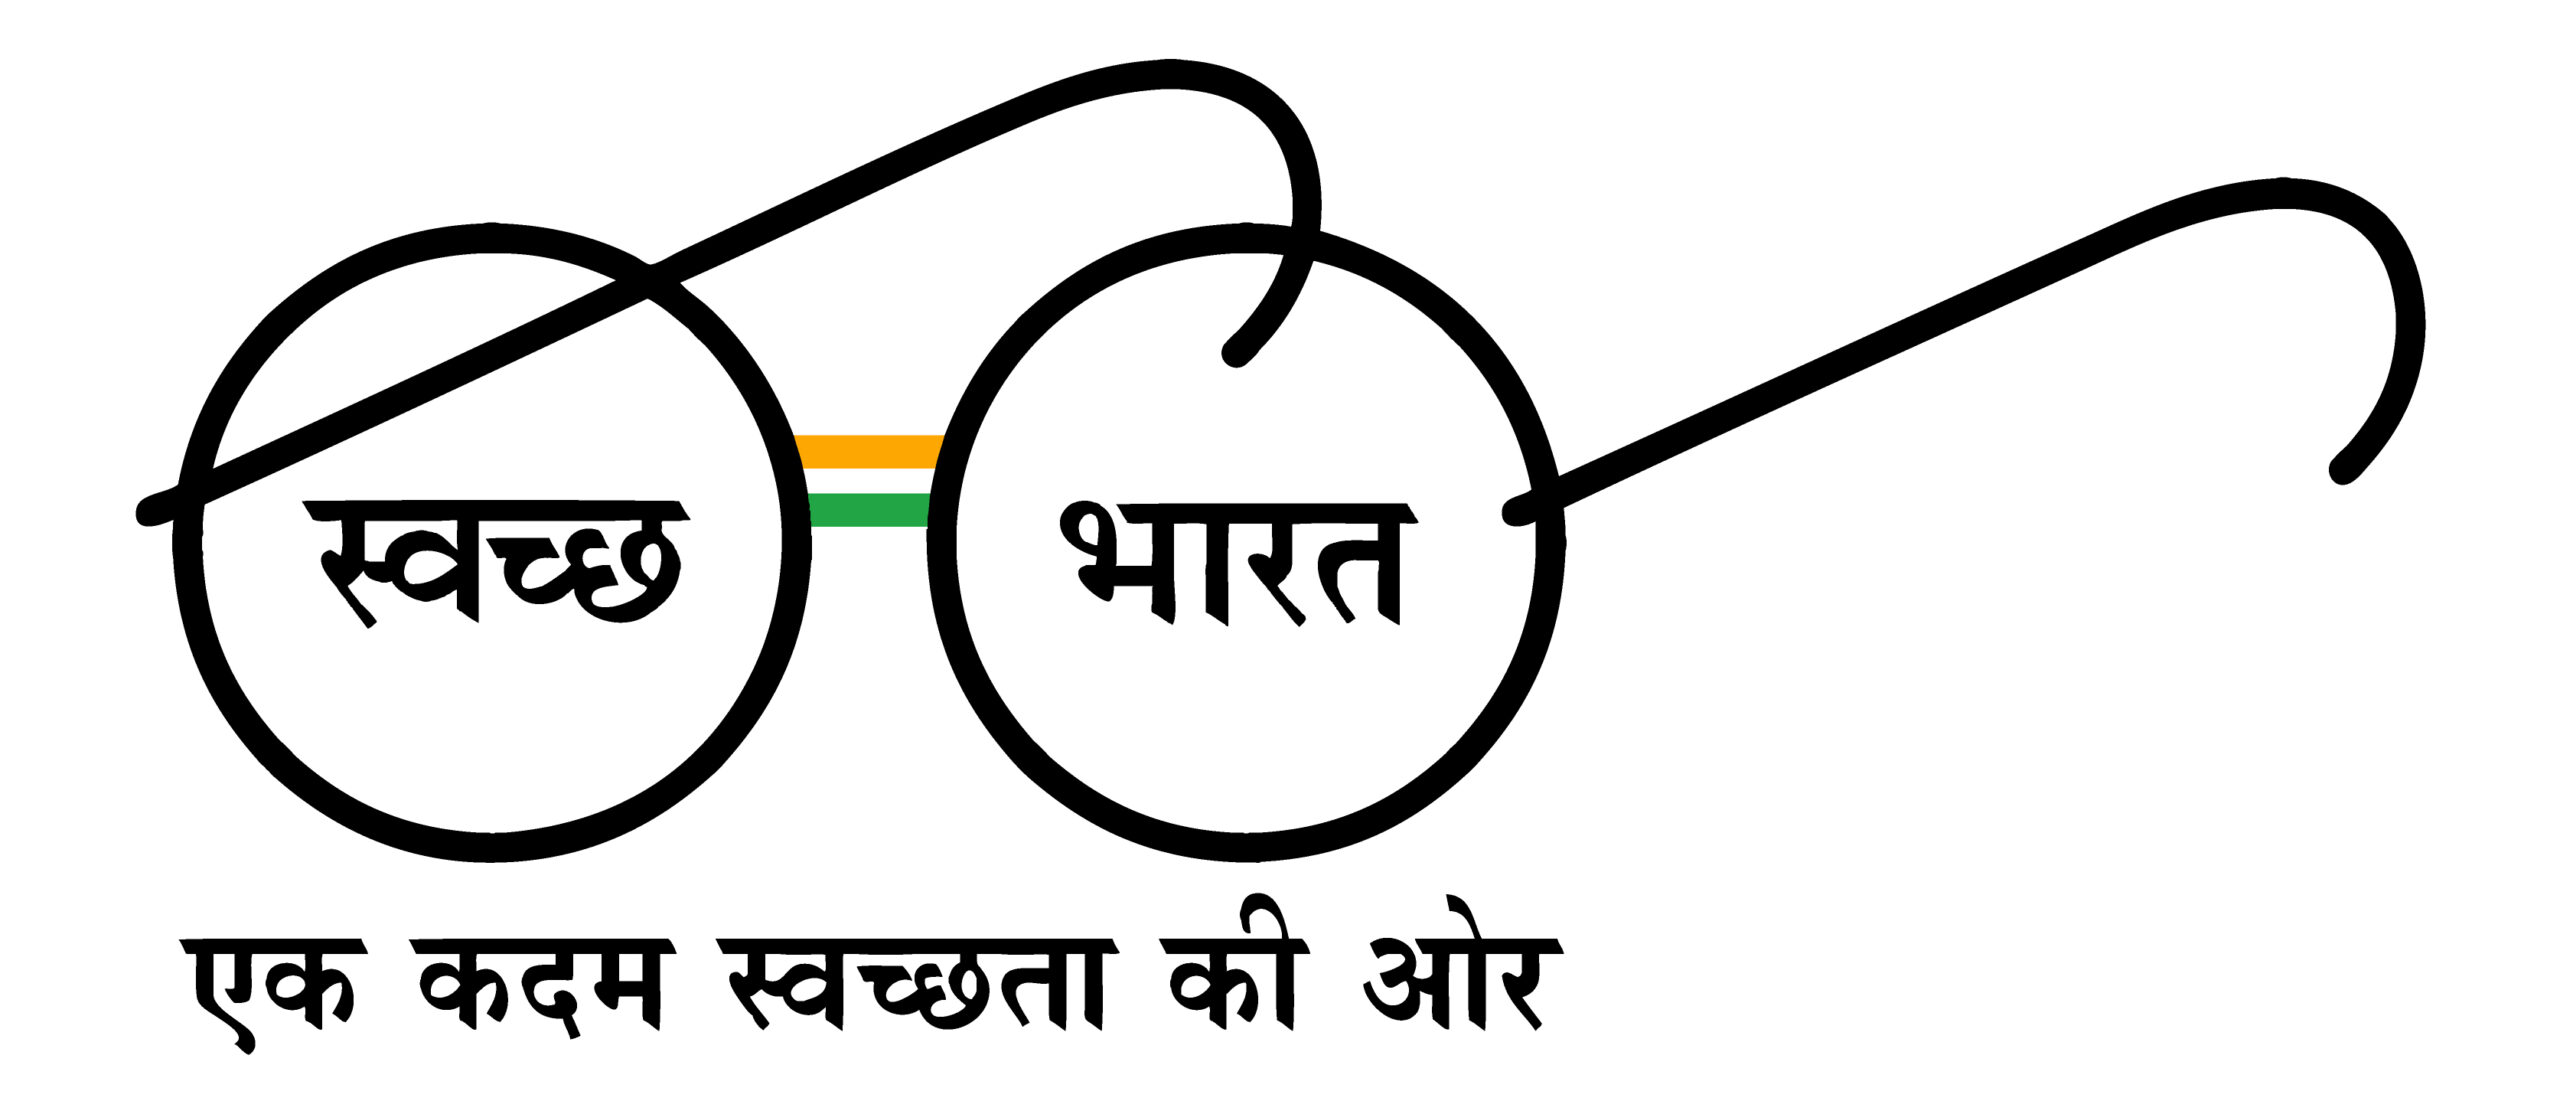 Logo - Swatch Bharat